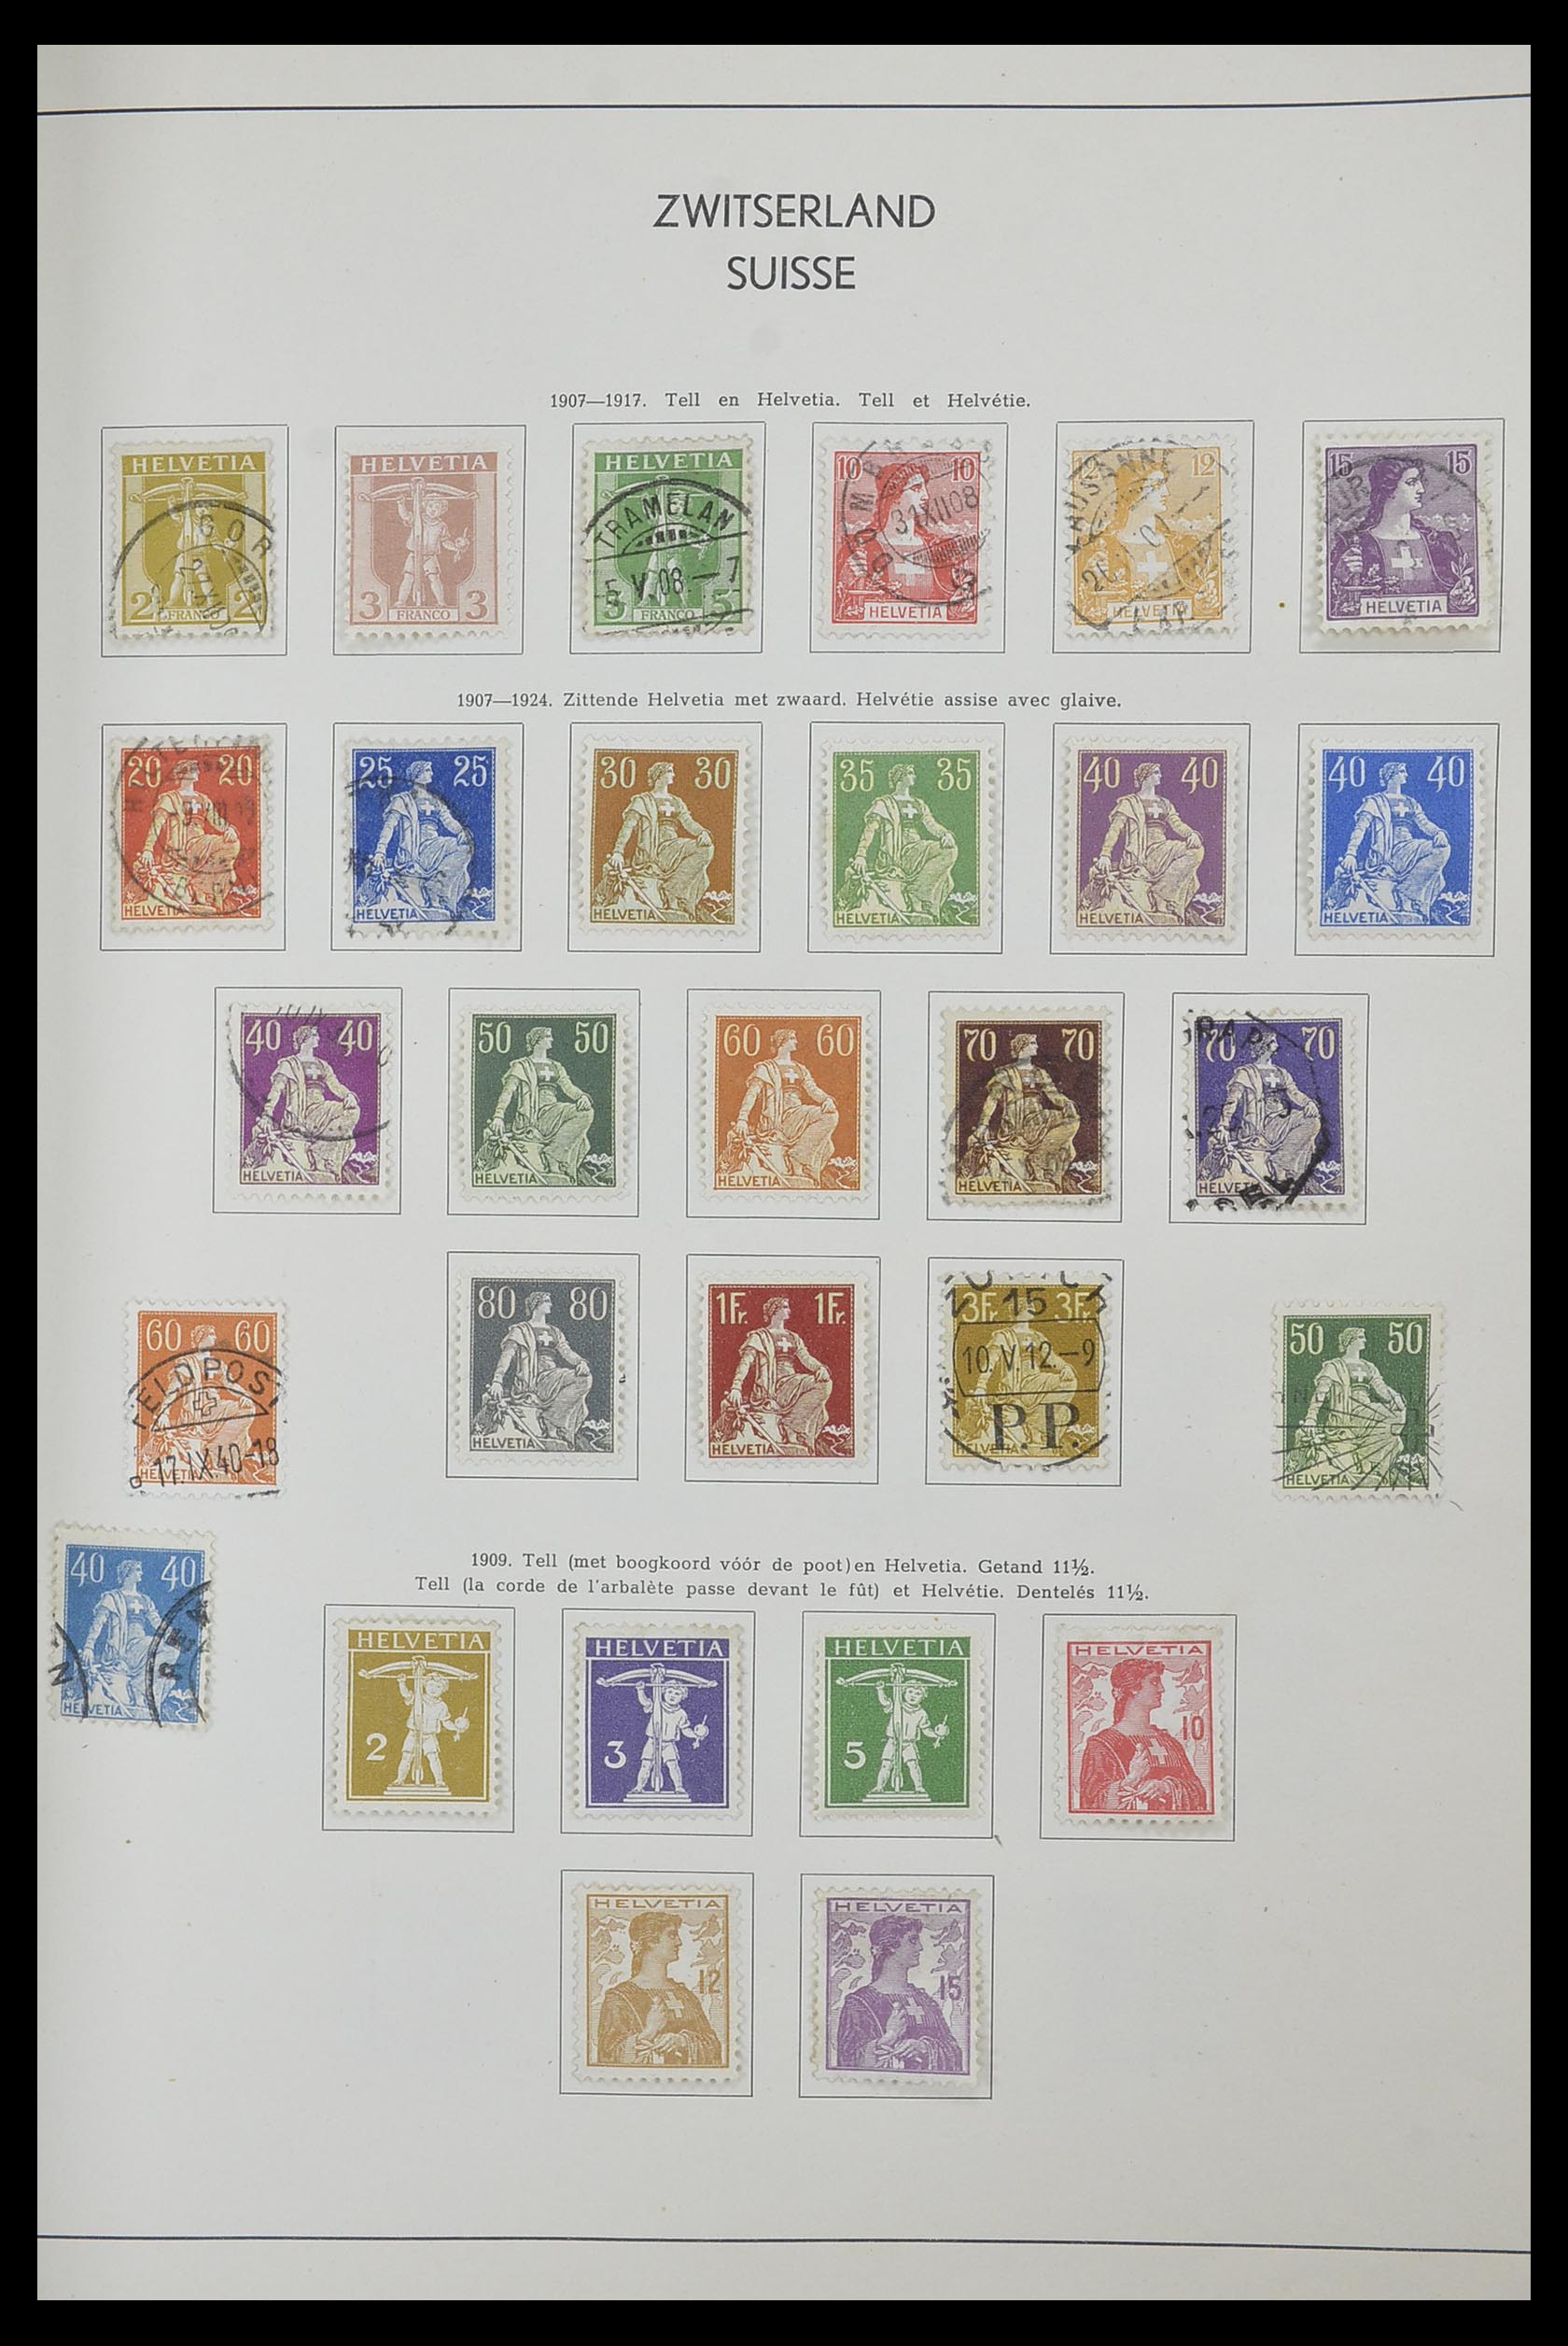 33601 006 - Stamp collection 33601 Switzerland 1854-1985.